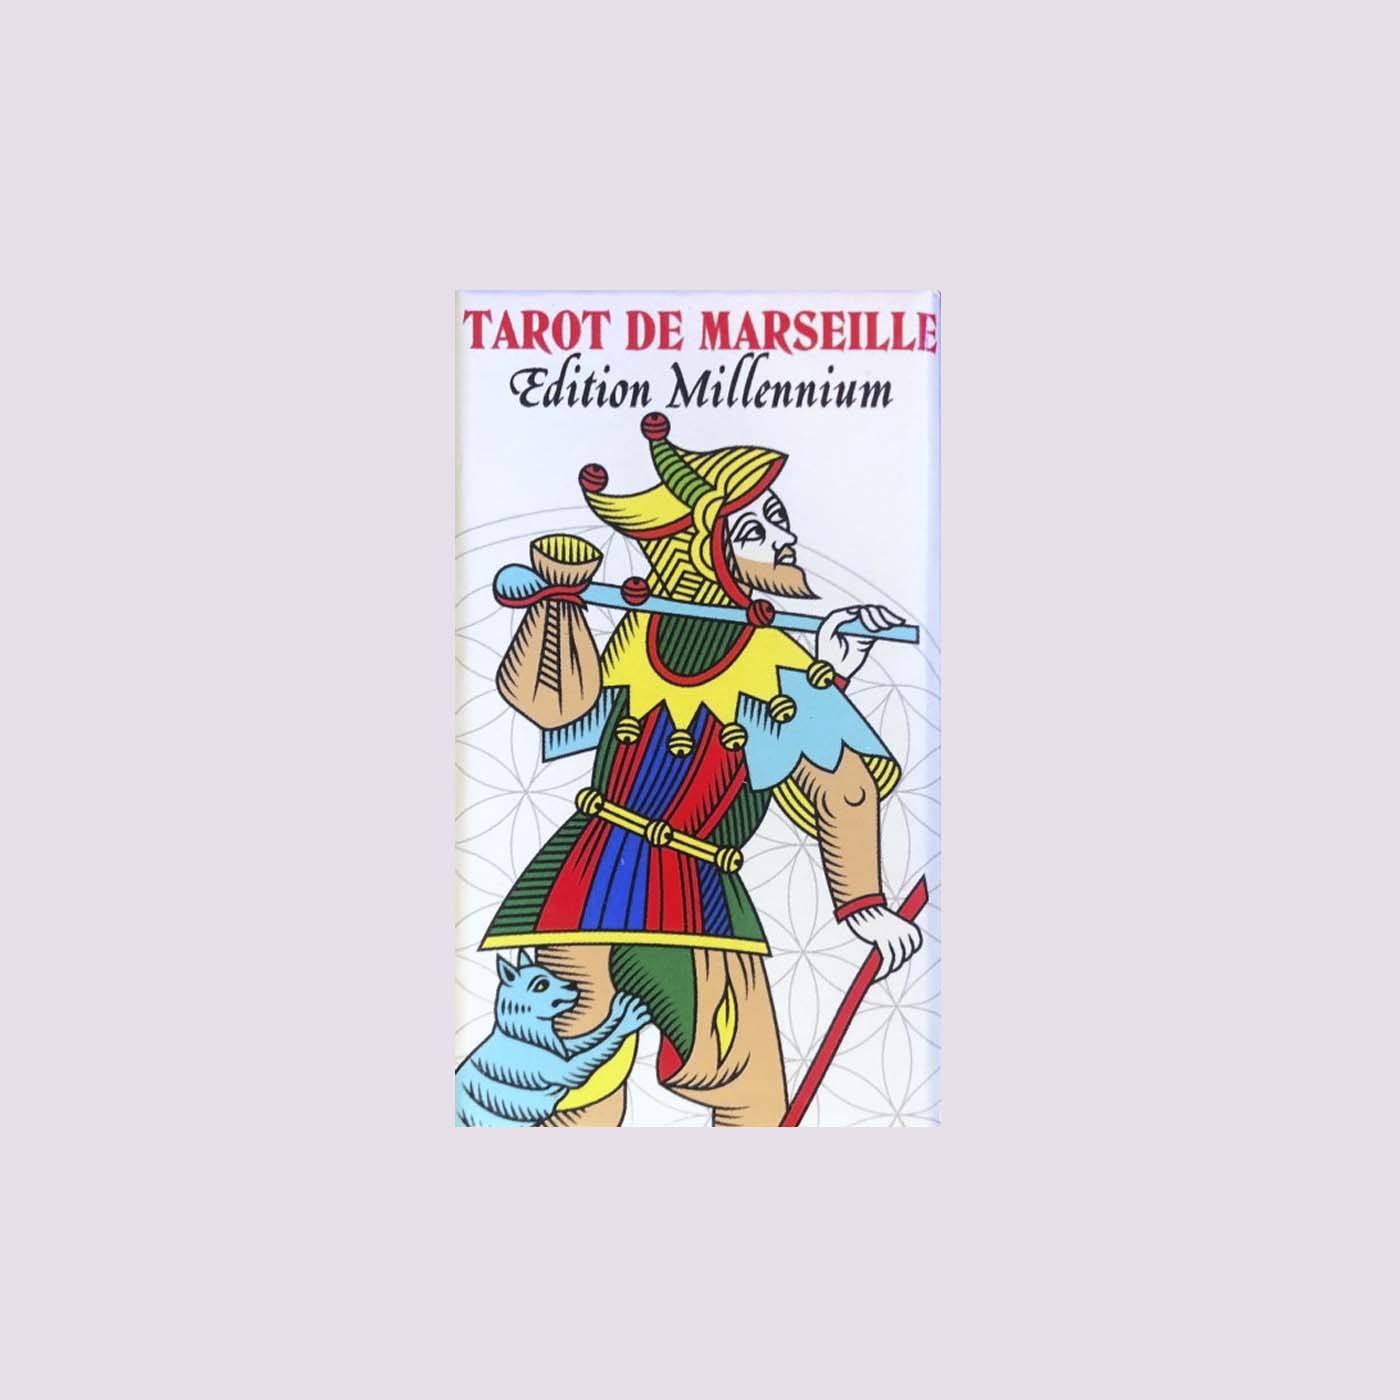 Tarot de Marseille Édition Millennium - Livre + Jeu